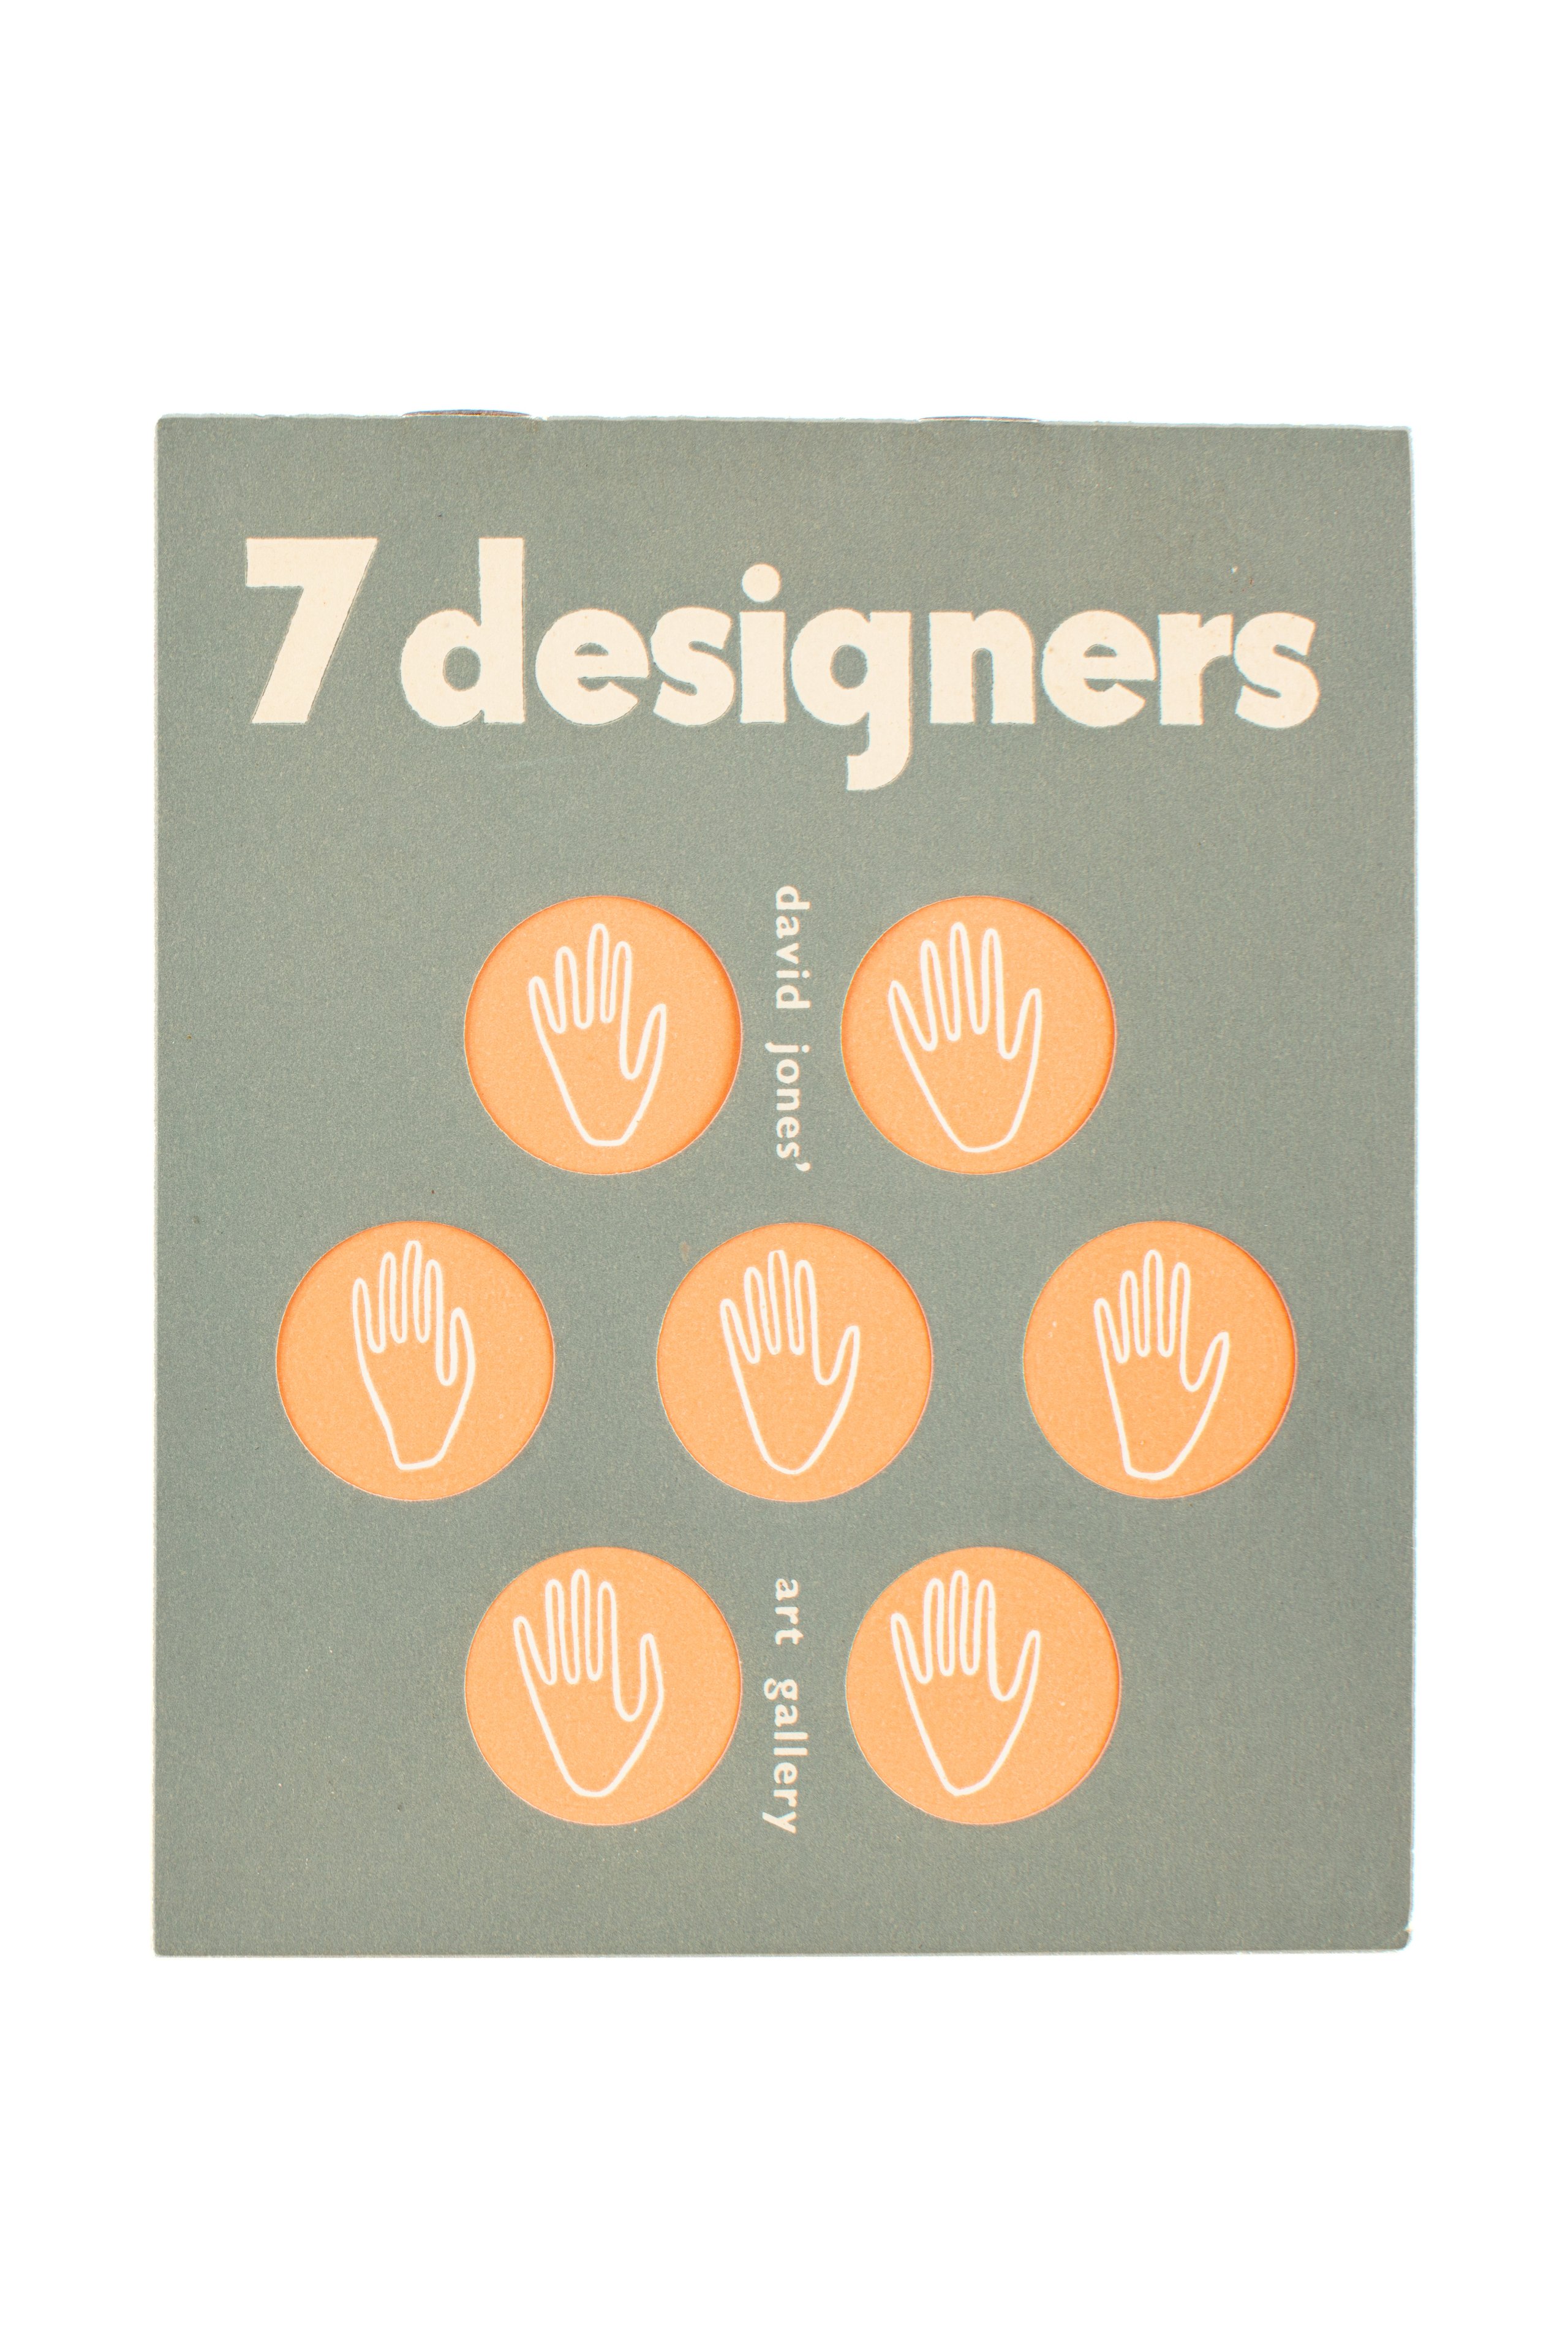 '7 Designers' exhibition catalogue